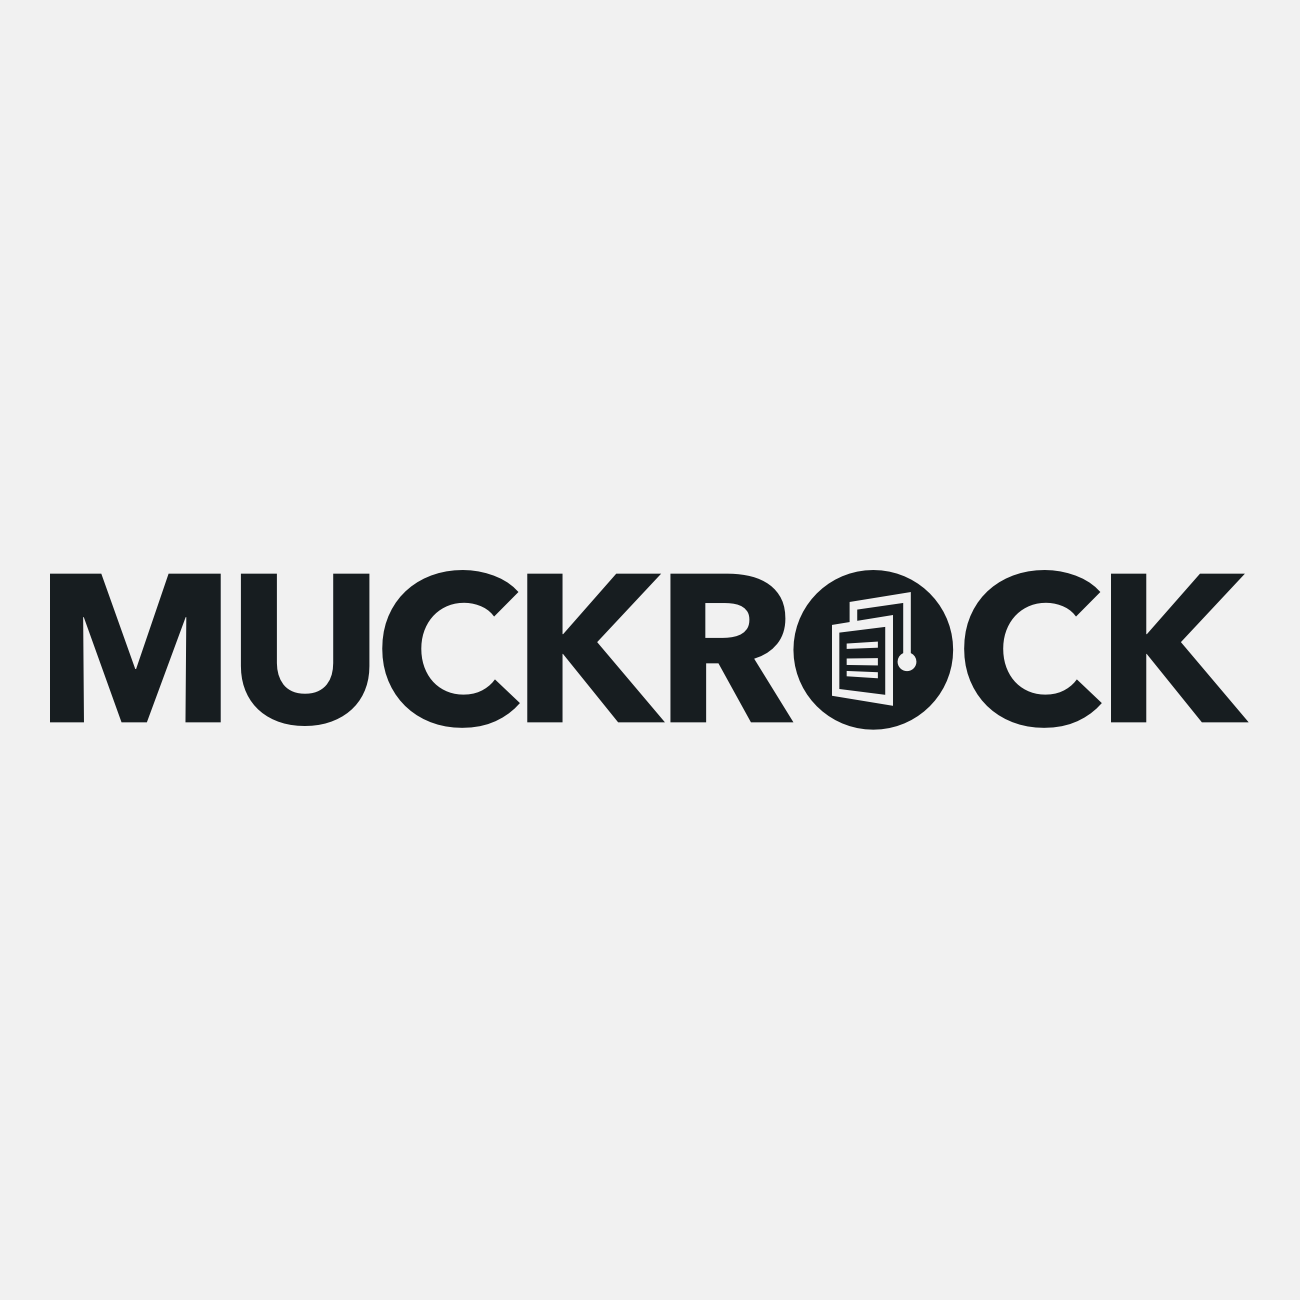 Muckrock